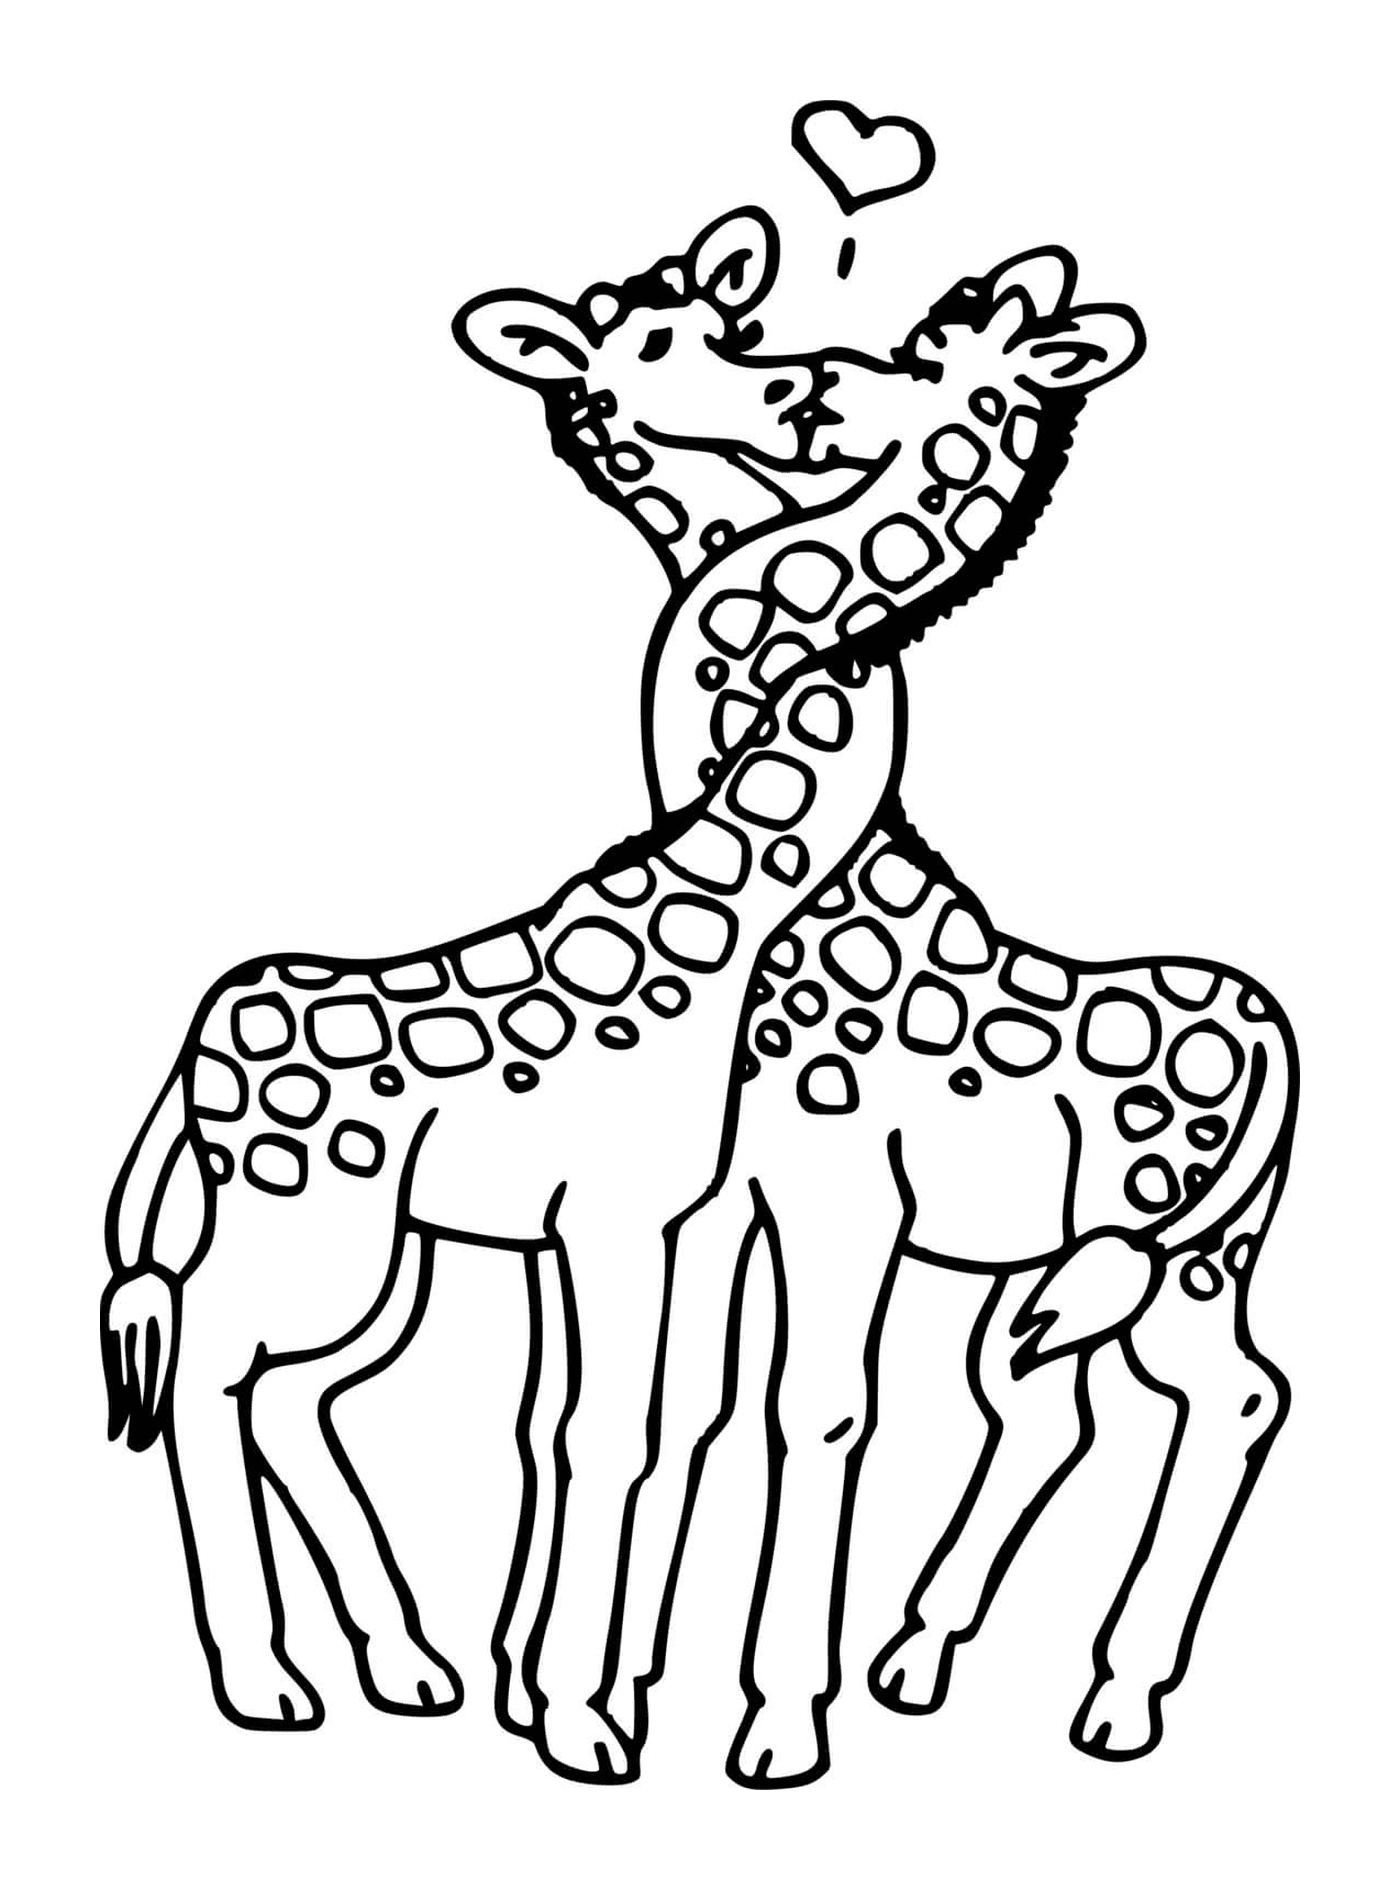  Two giraffes kissing 